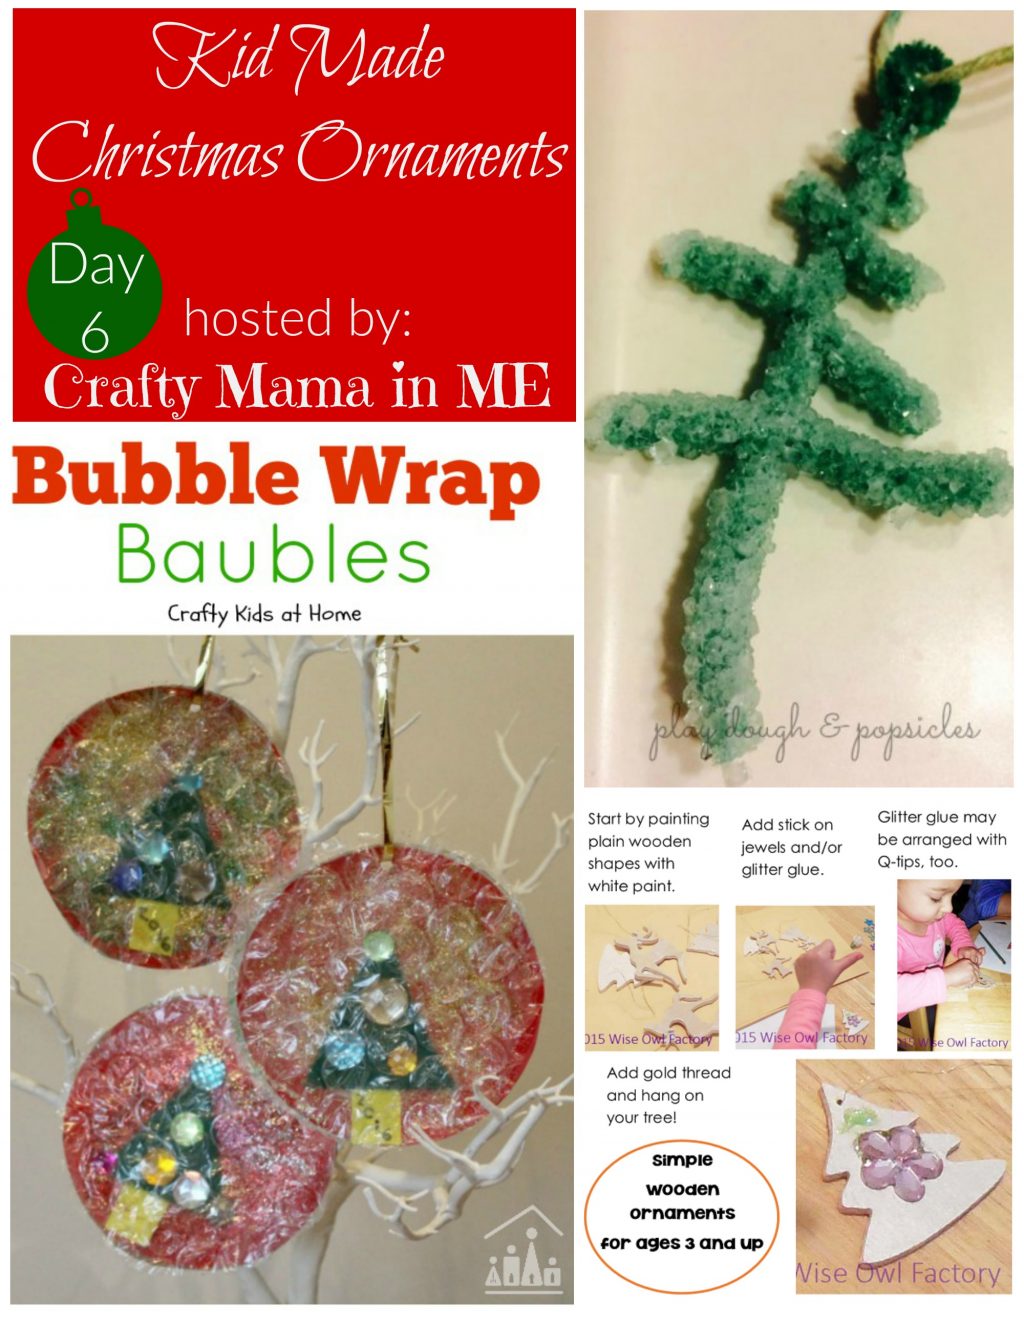 Day 6 - Kid Made Christmas Ornaments Blog Hop